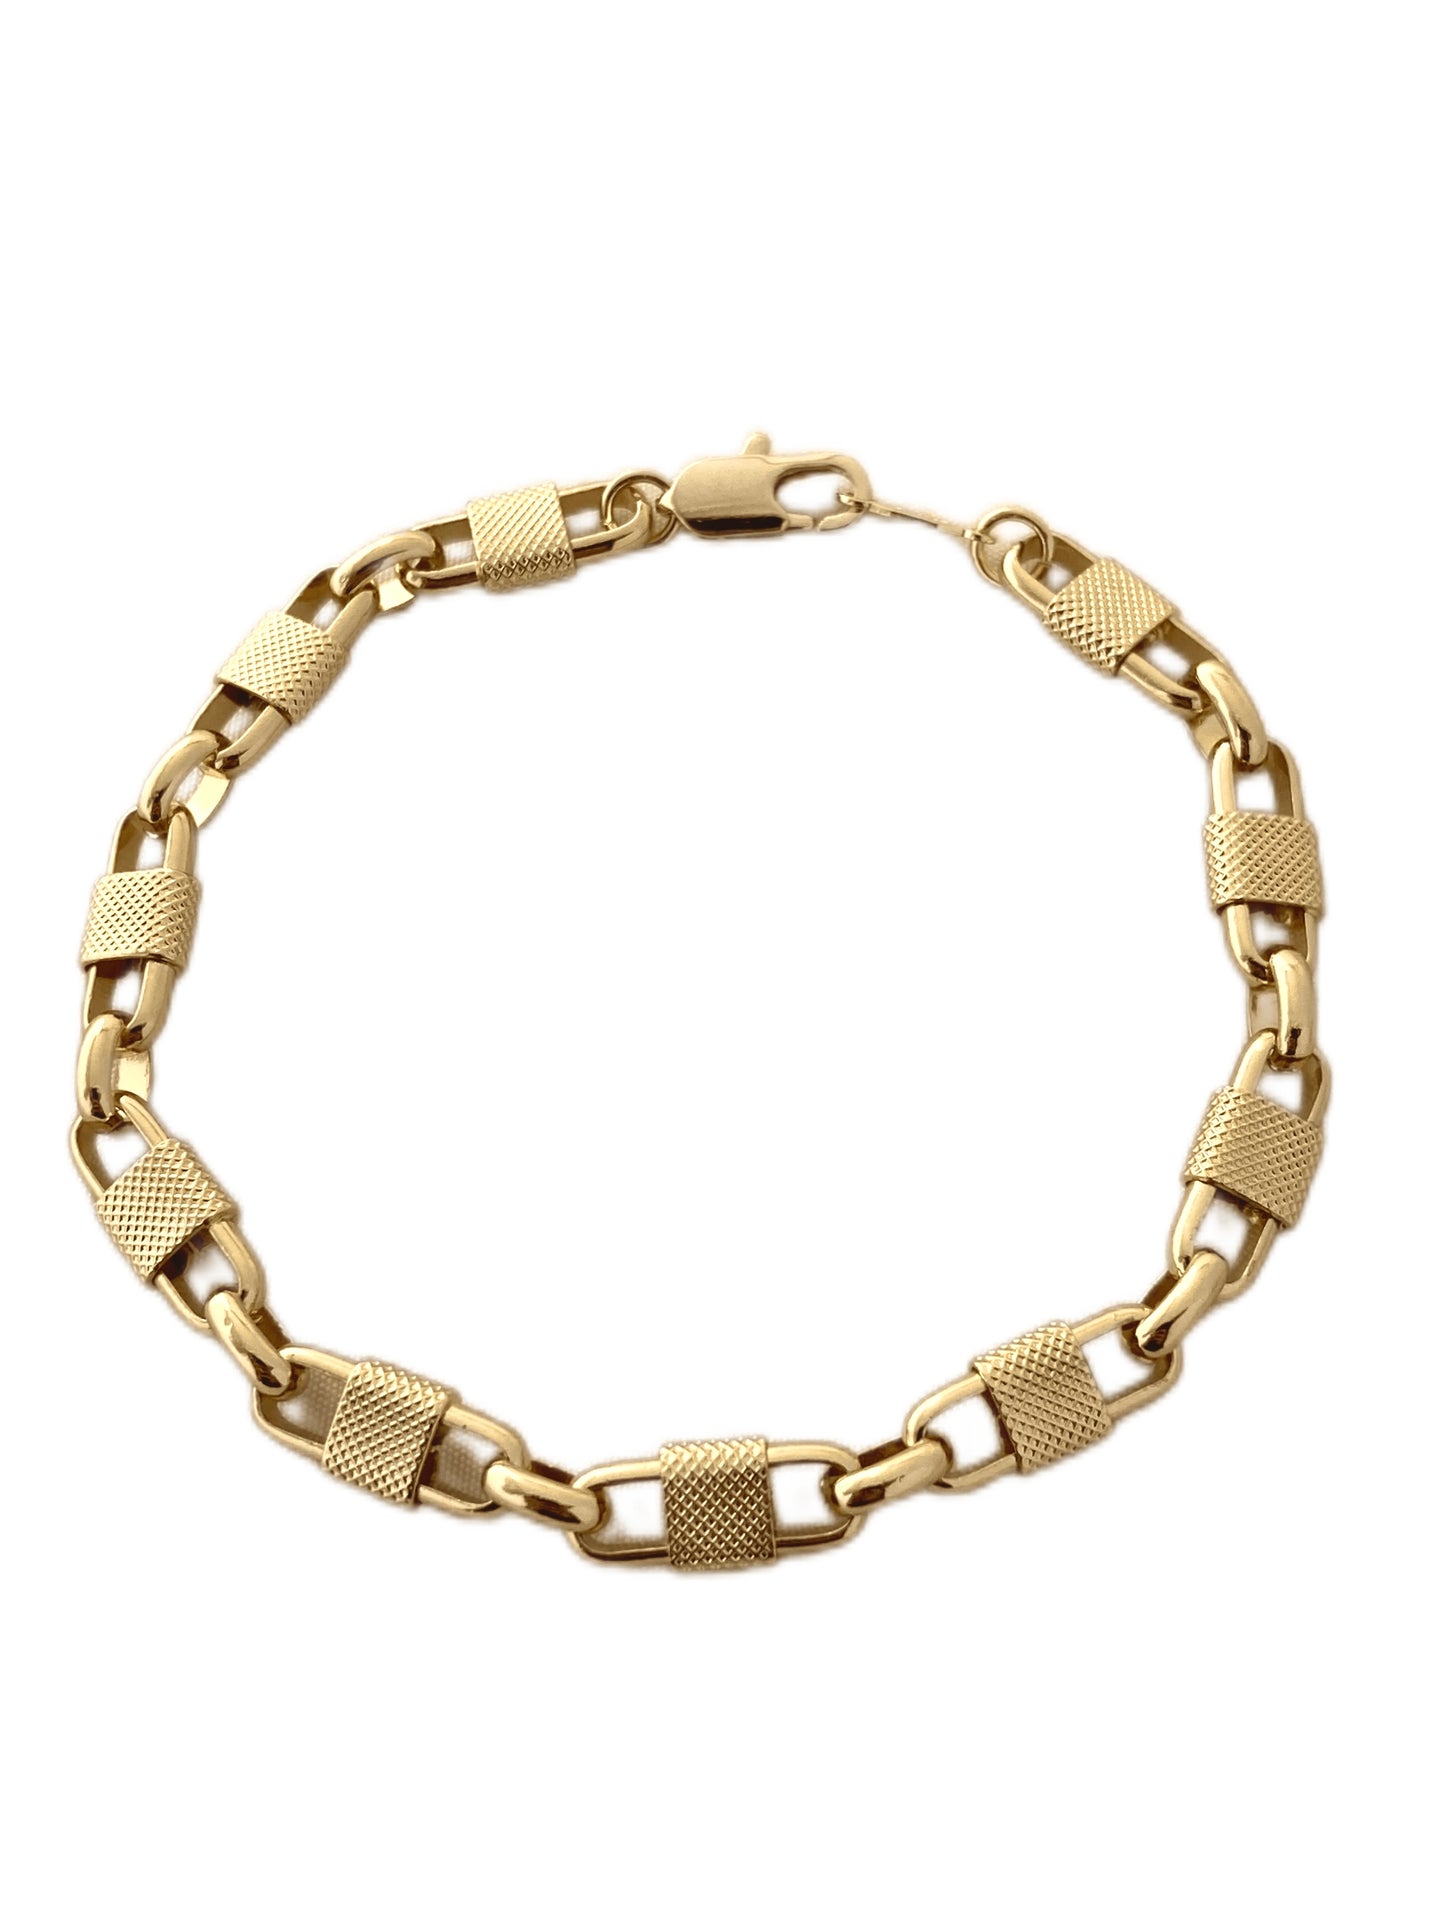 The Tomi Bex Chain Bracelet